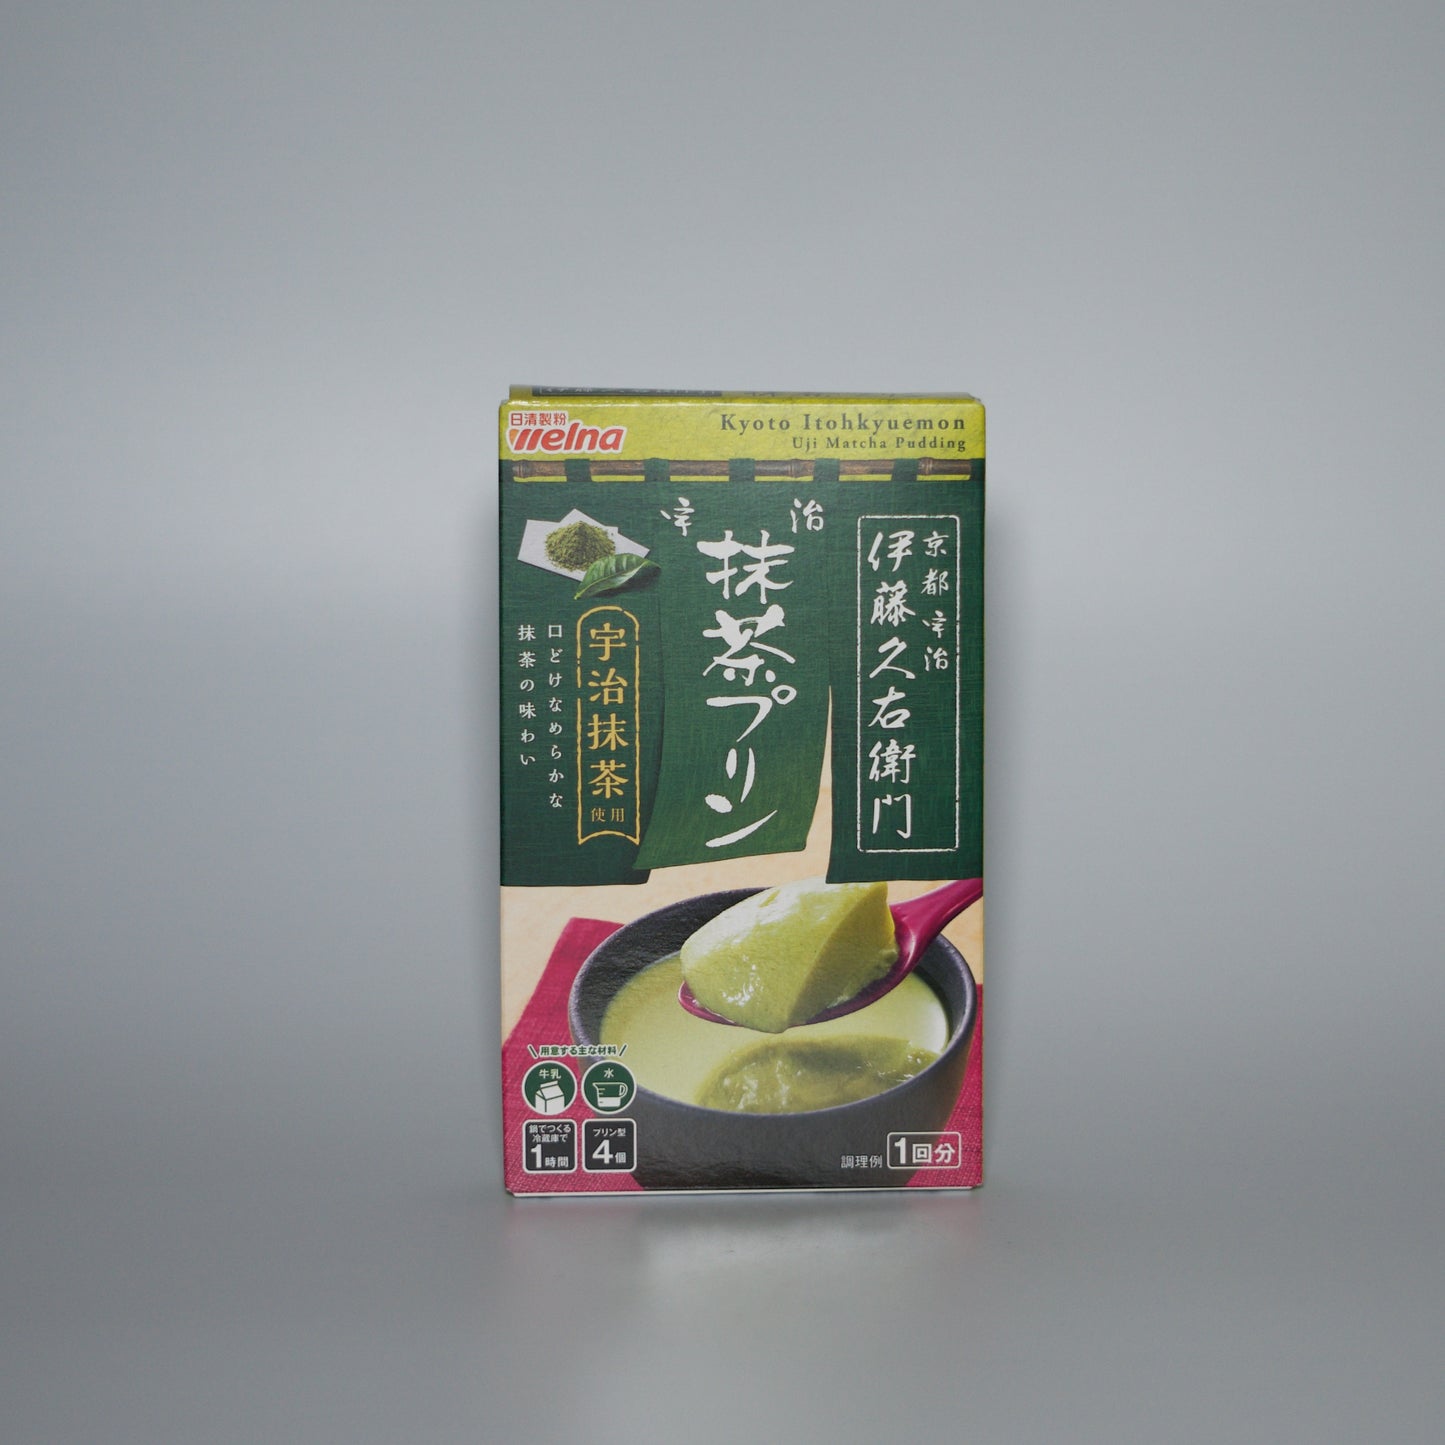 Nissin Welna Kyoto Itohkyuemon Uji Matcha Pudding Powder 50g